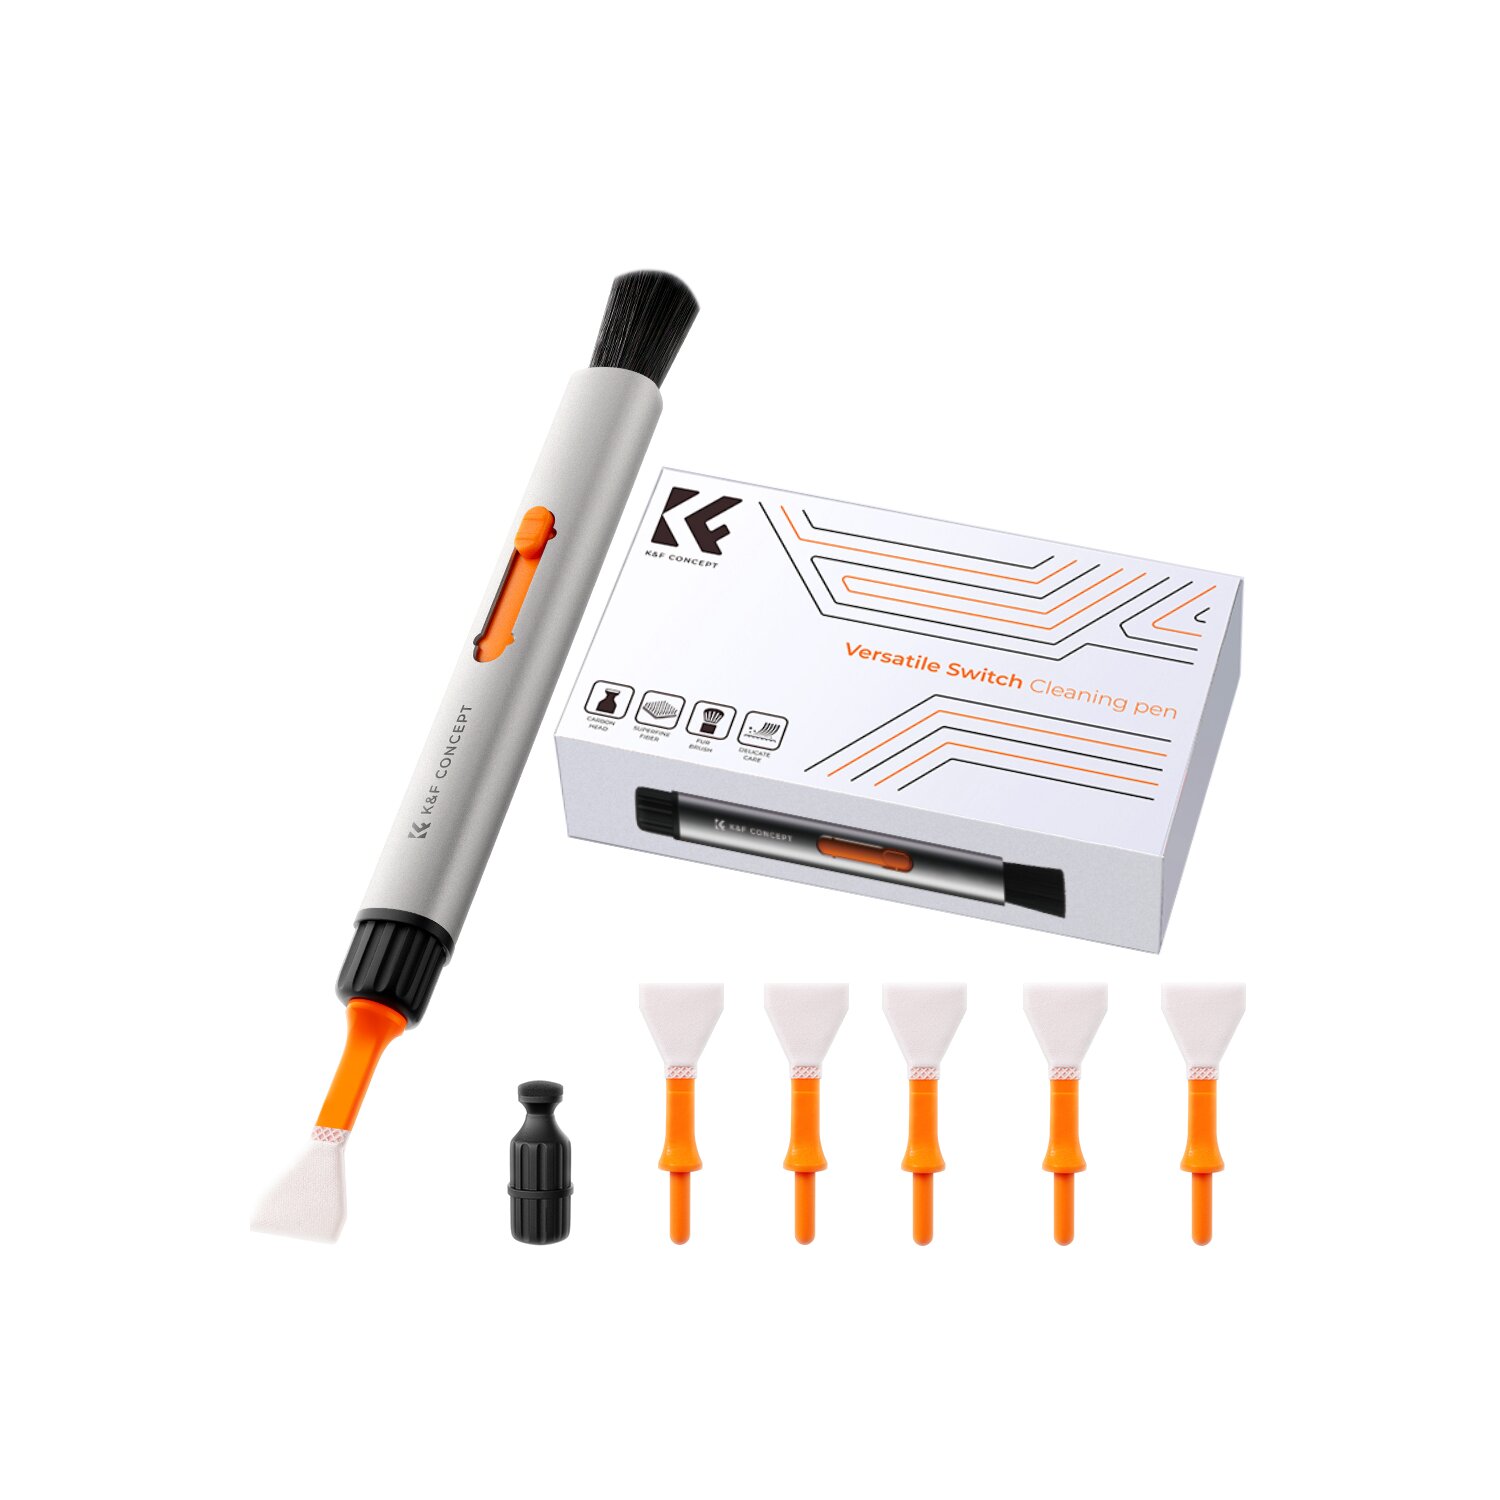 Minadax KF Sensor Objektiv und Kamera Reinigungs-Set für APS-C Sensor - Köpfe Austauschbar